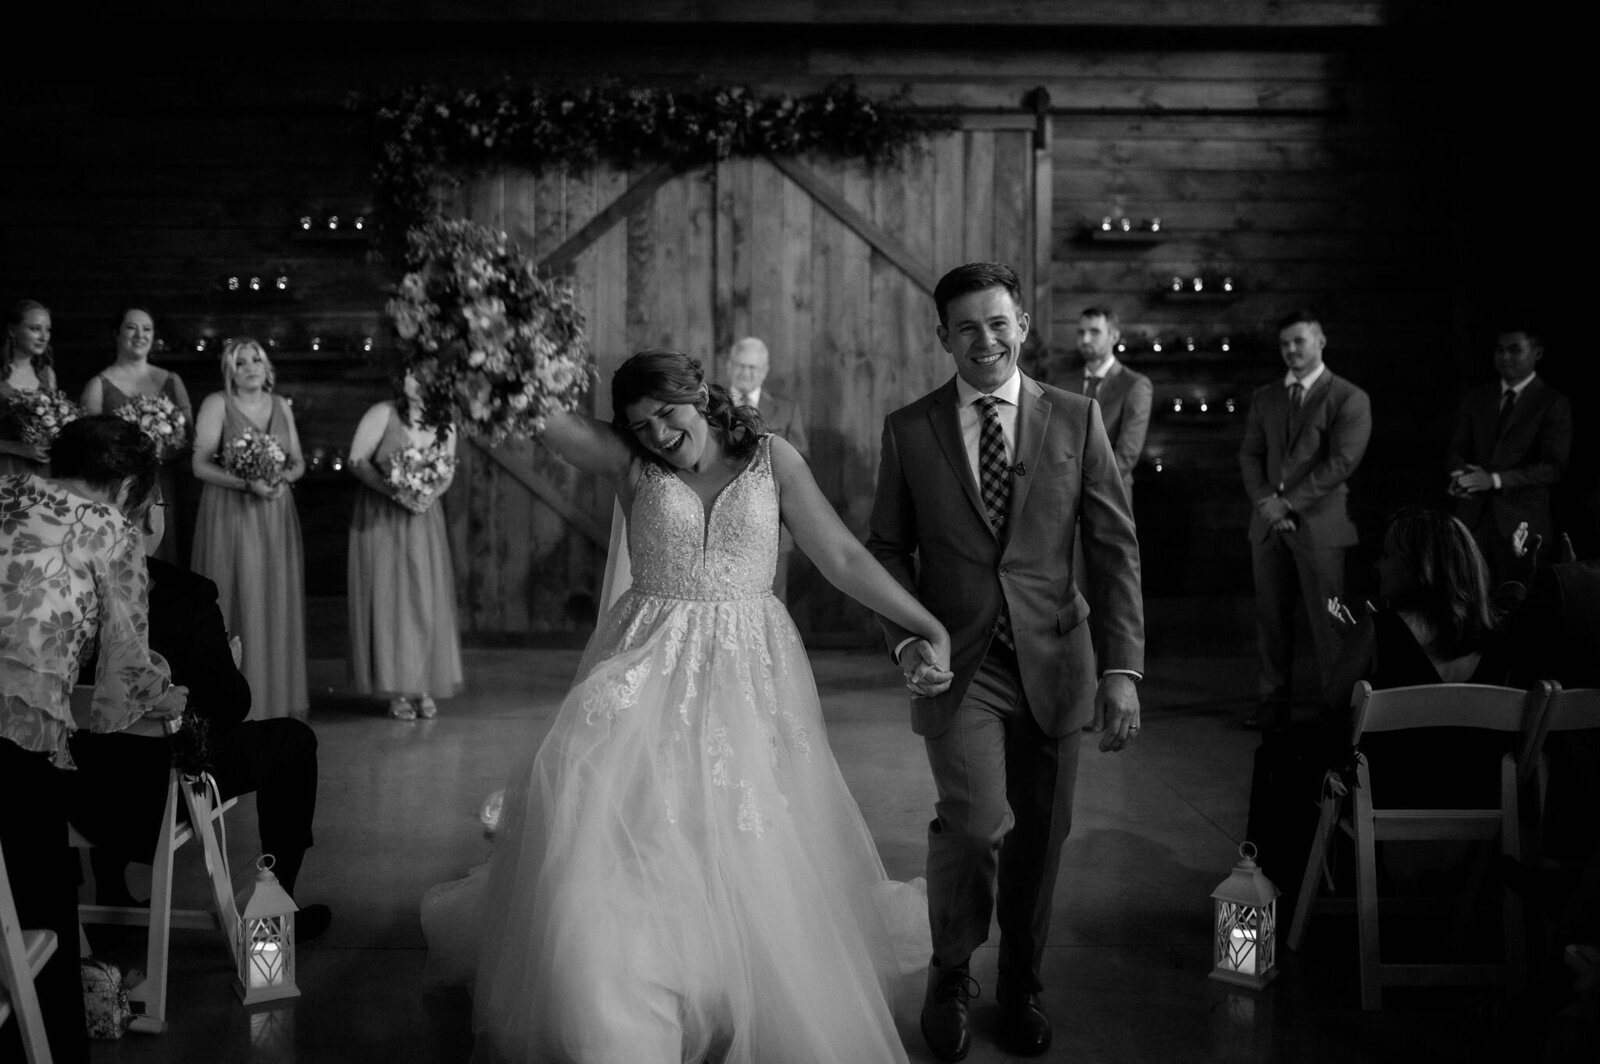 couple exiting wedding ceremony in rustic barn holding hands, bride cheering